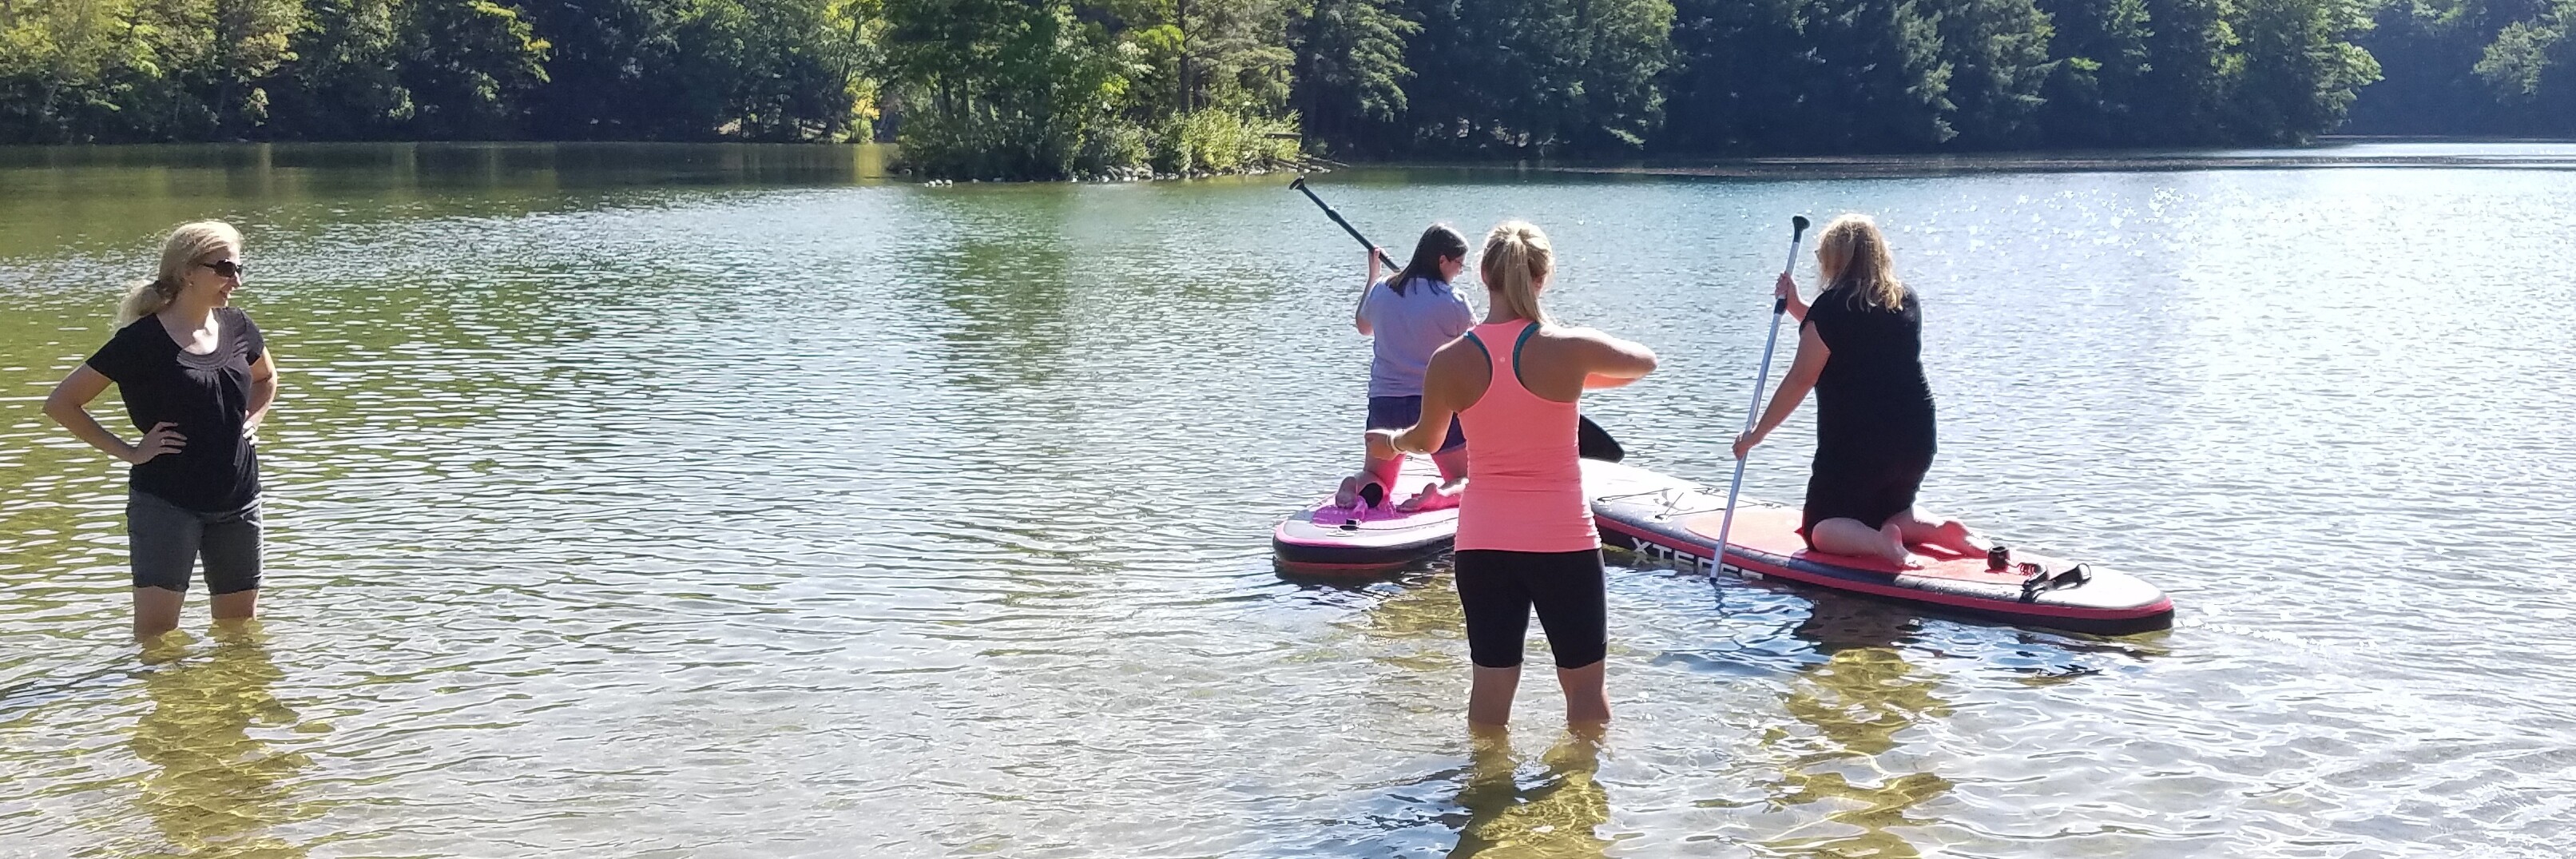 Caregivers paddle boarding in lake 